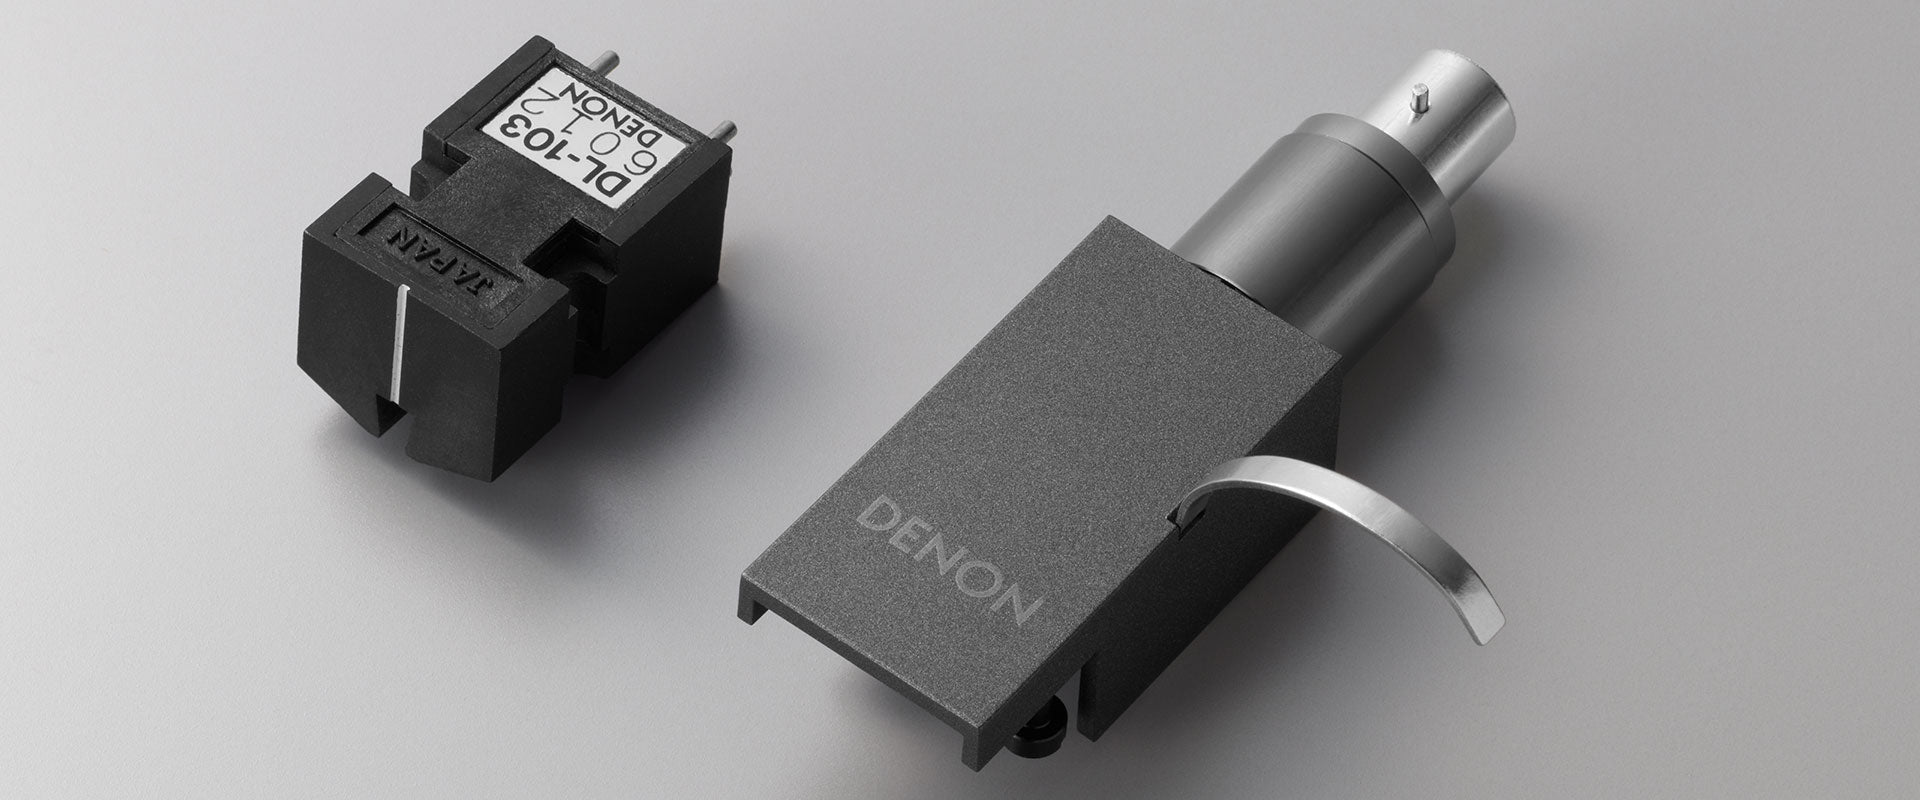 Denon DL-A110 testina Phono MC Premium Denon DL-A110 con portatestina